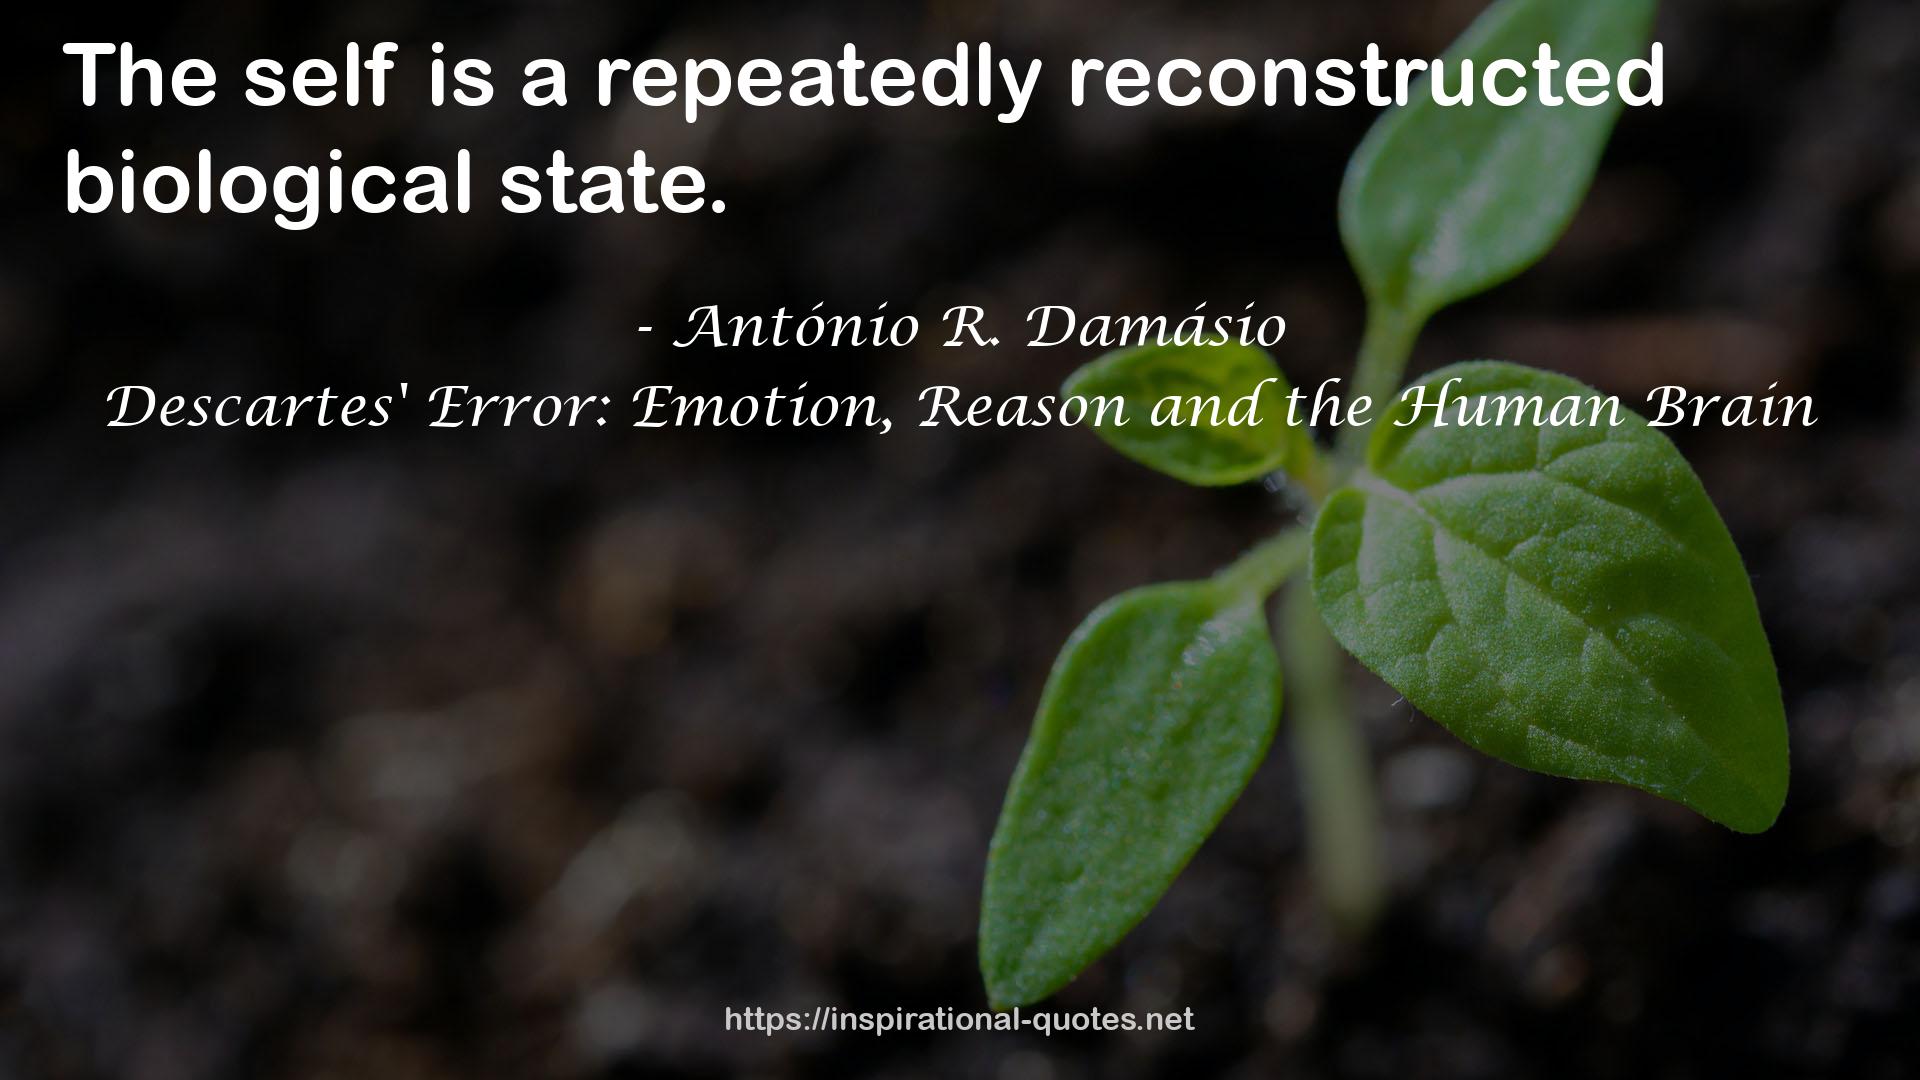 Descartes' Error: Emotion, Reason and the Human Brain QUOTES